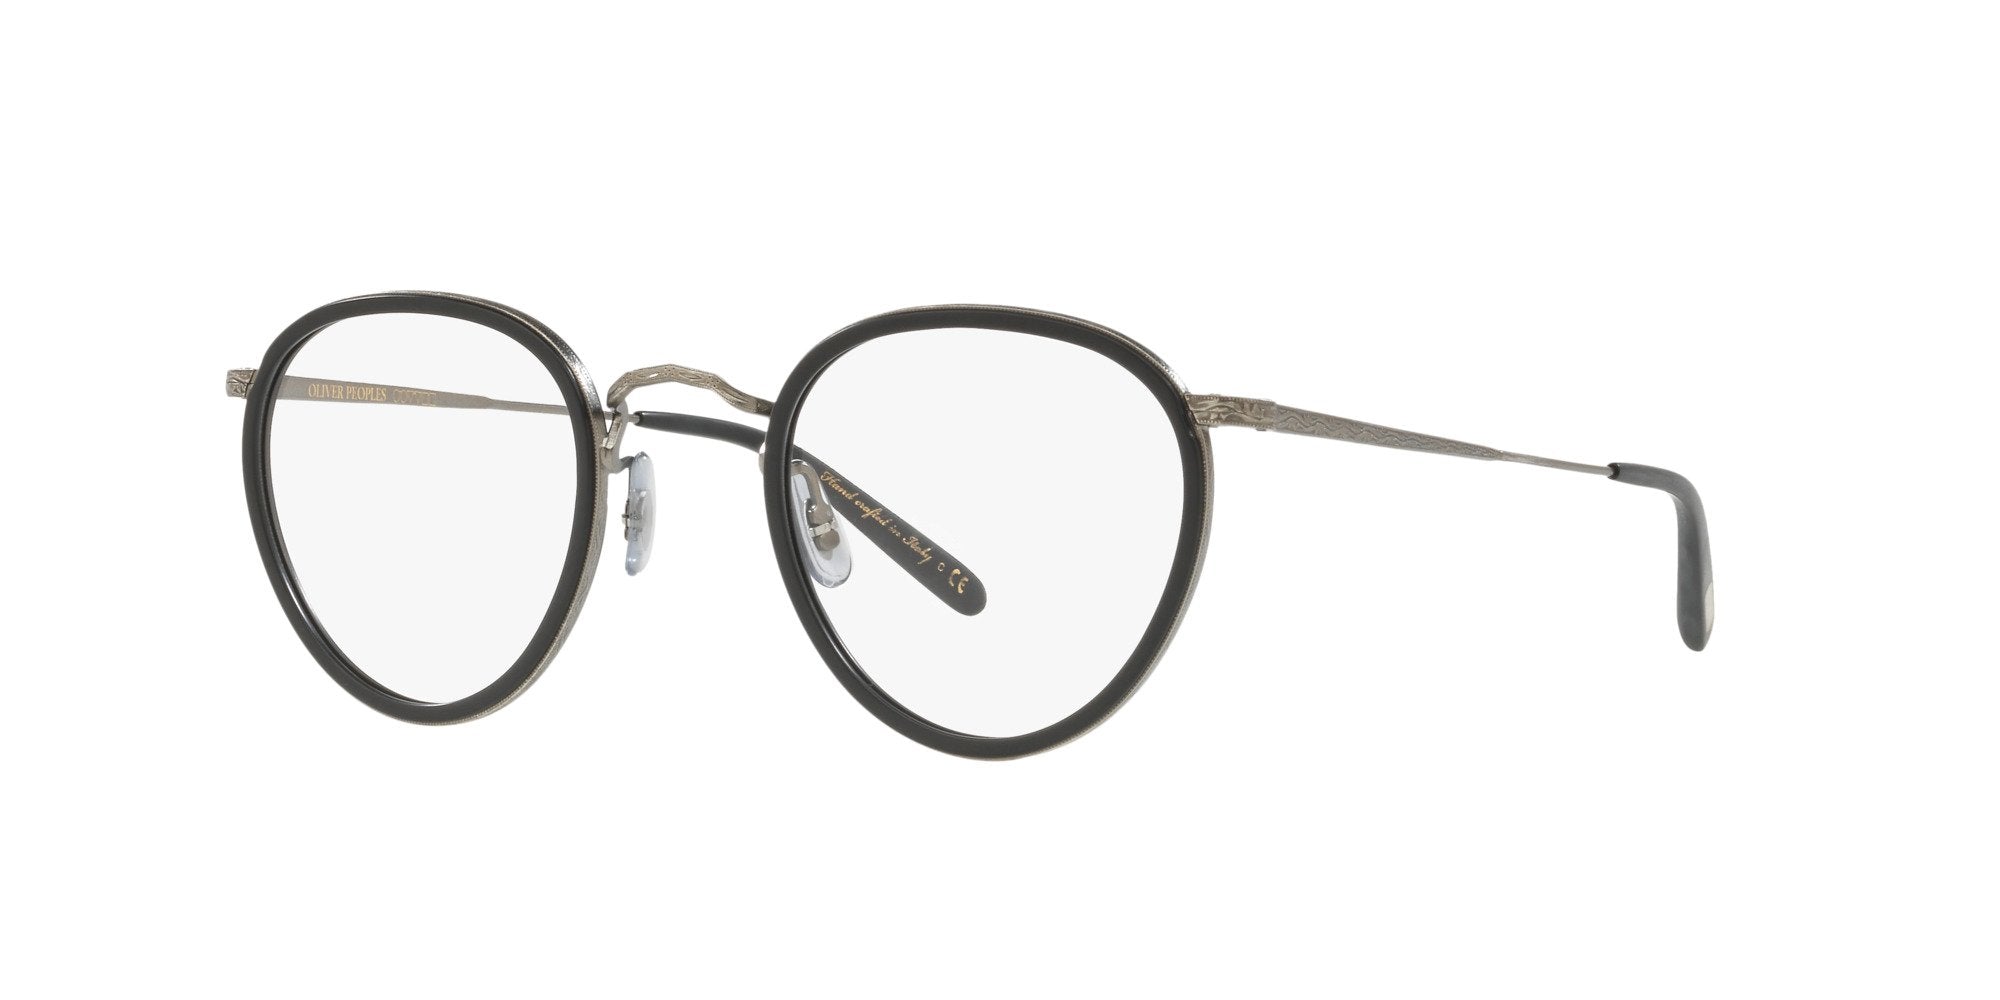 Oliver Peoples Mp 2 Ov1104 Round Glasses Fashion Eyewear Us